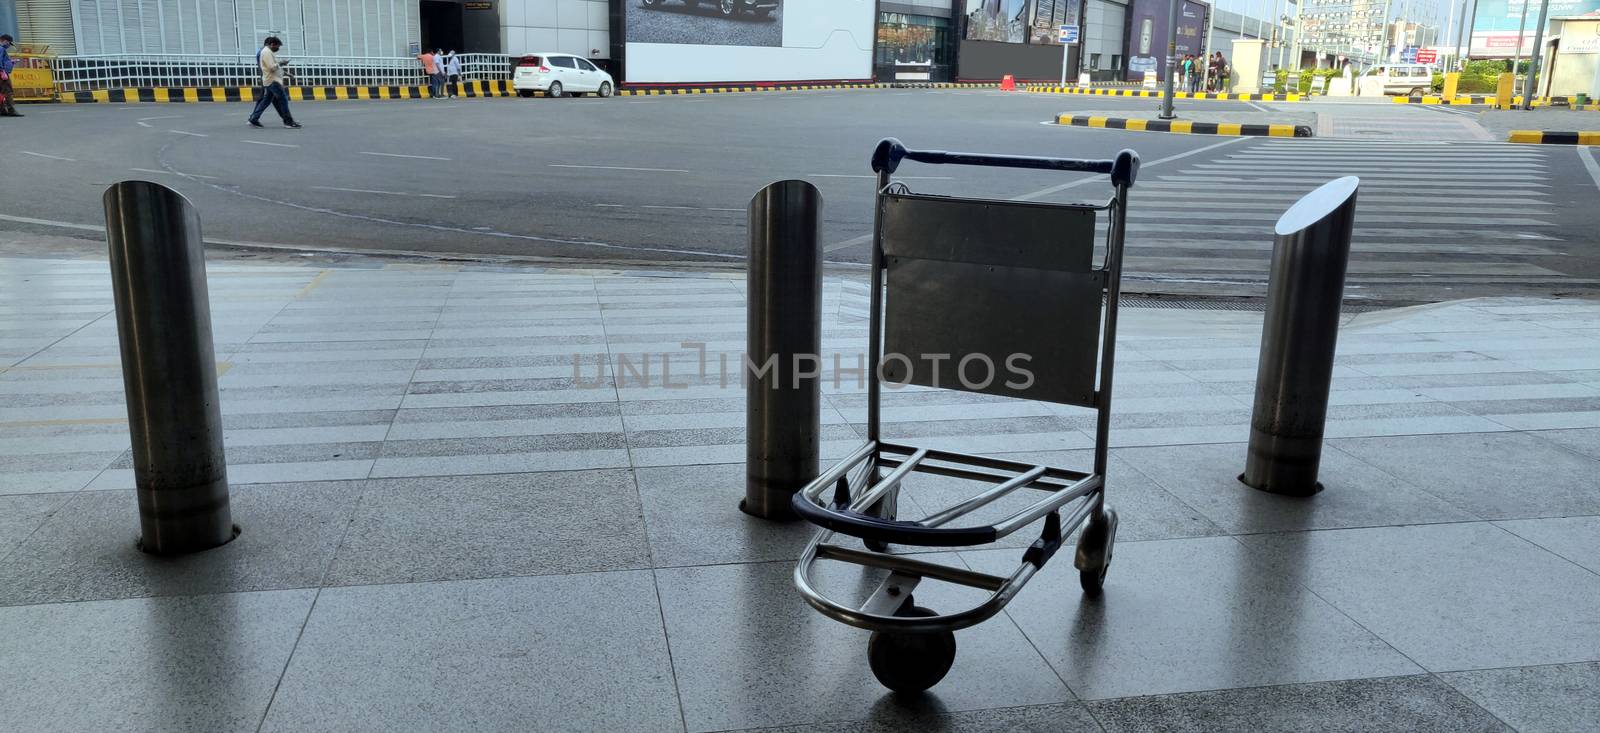 Abandoned and empty bag trolley at International airport of Delhi in June 2020 amidst corona virus pandemic at Indira Gandhi International Airport in Delhi, India